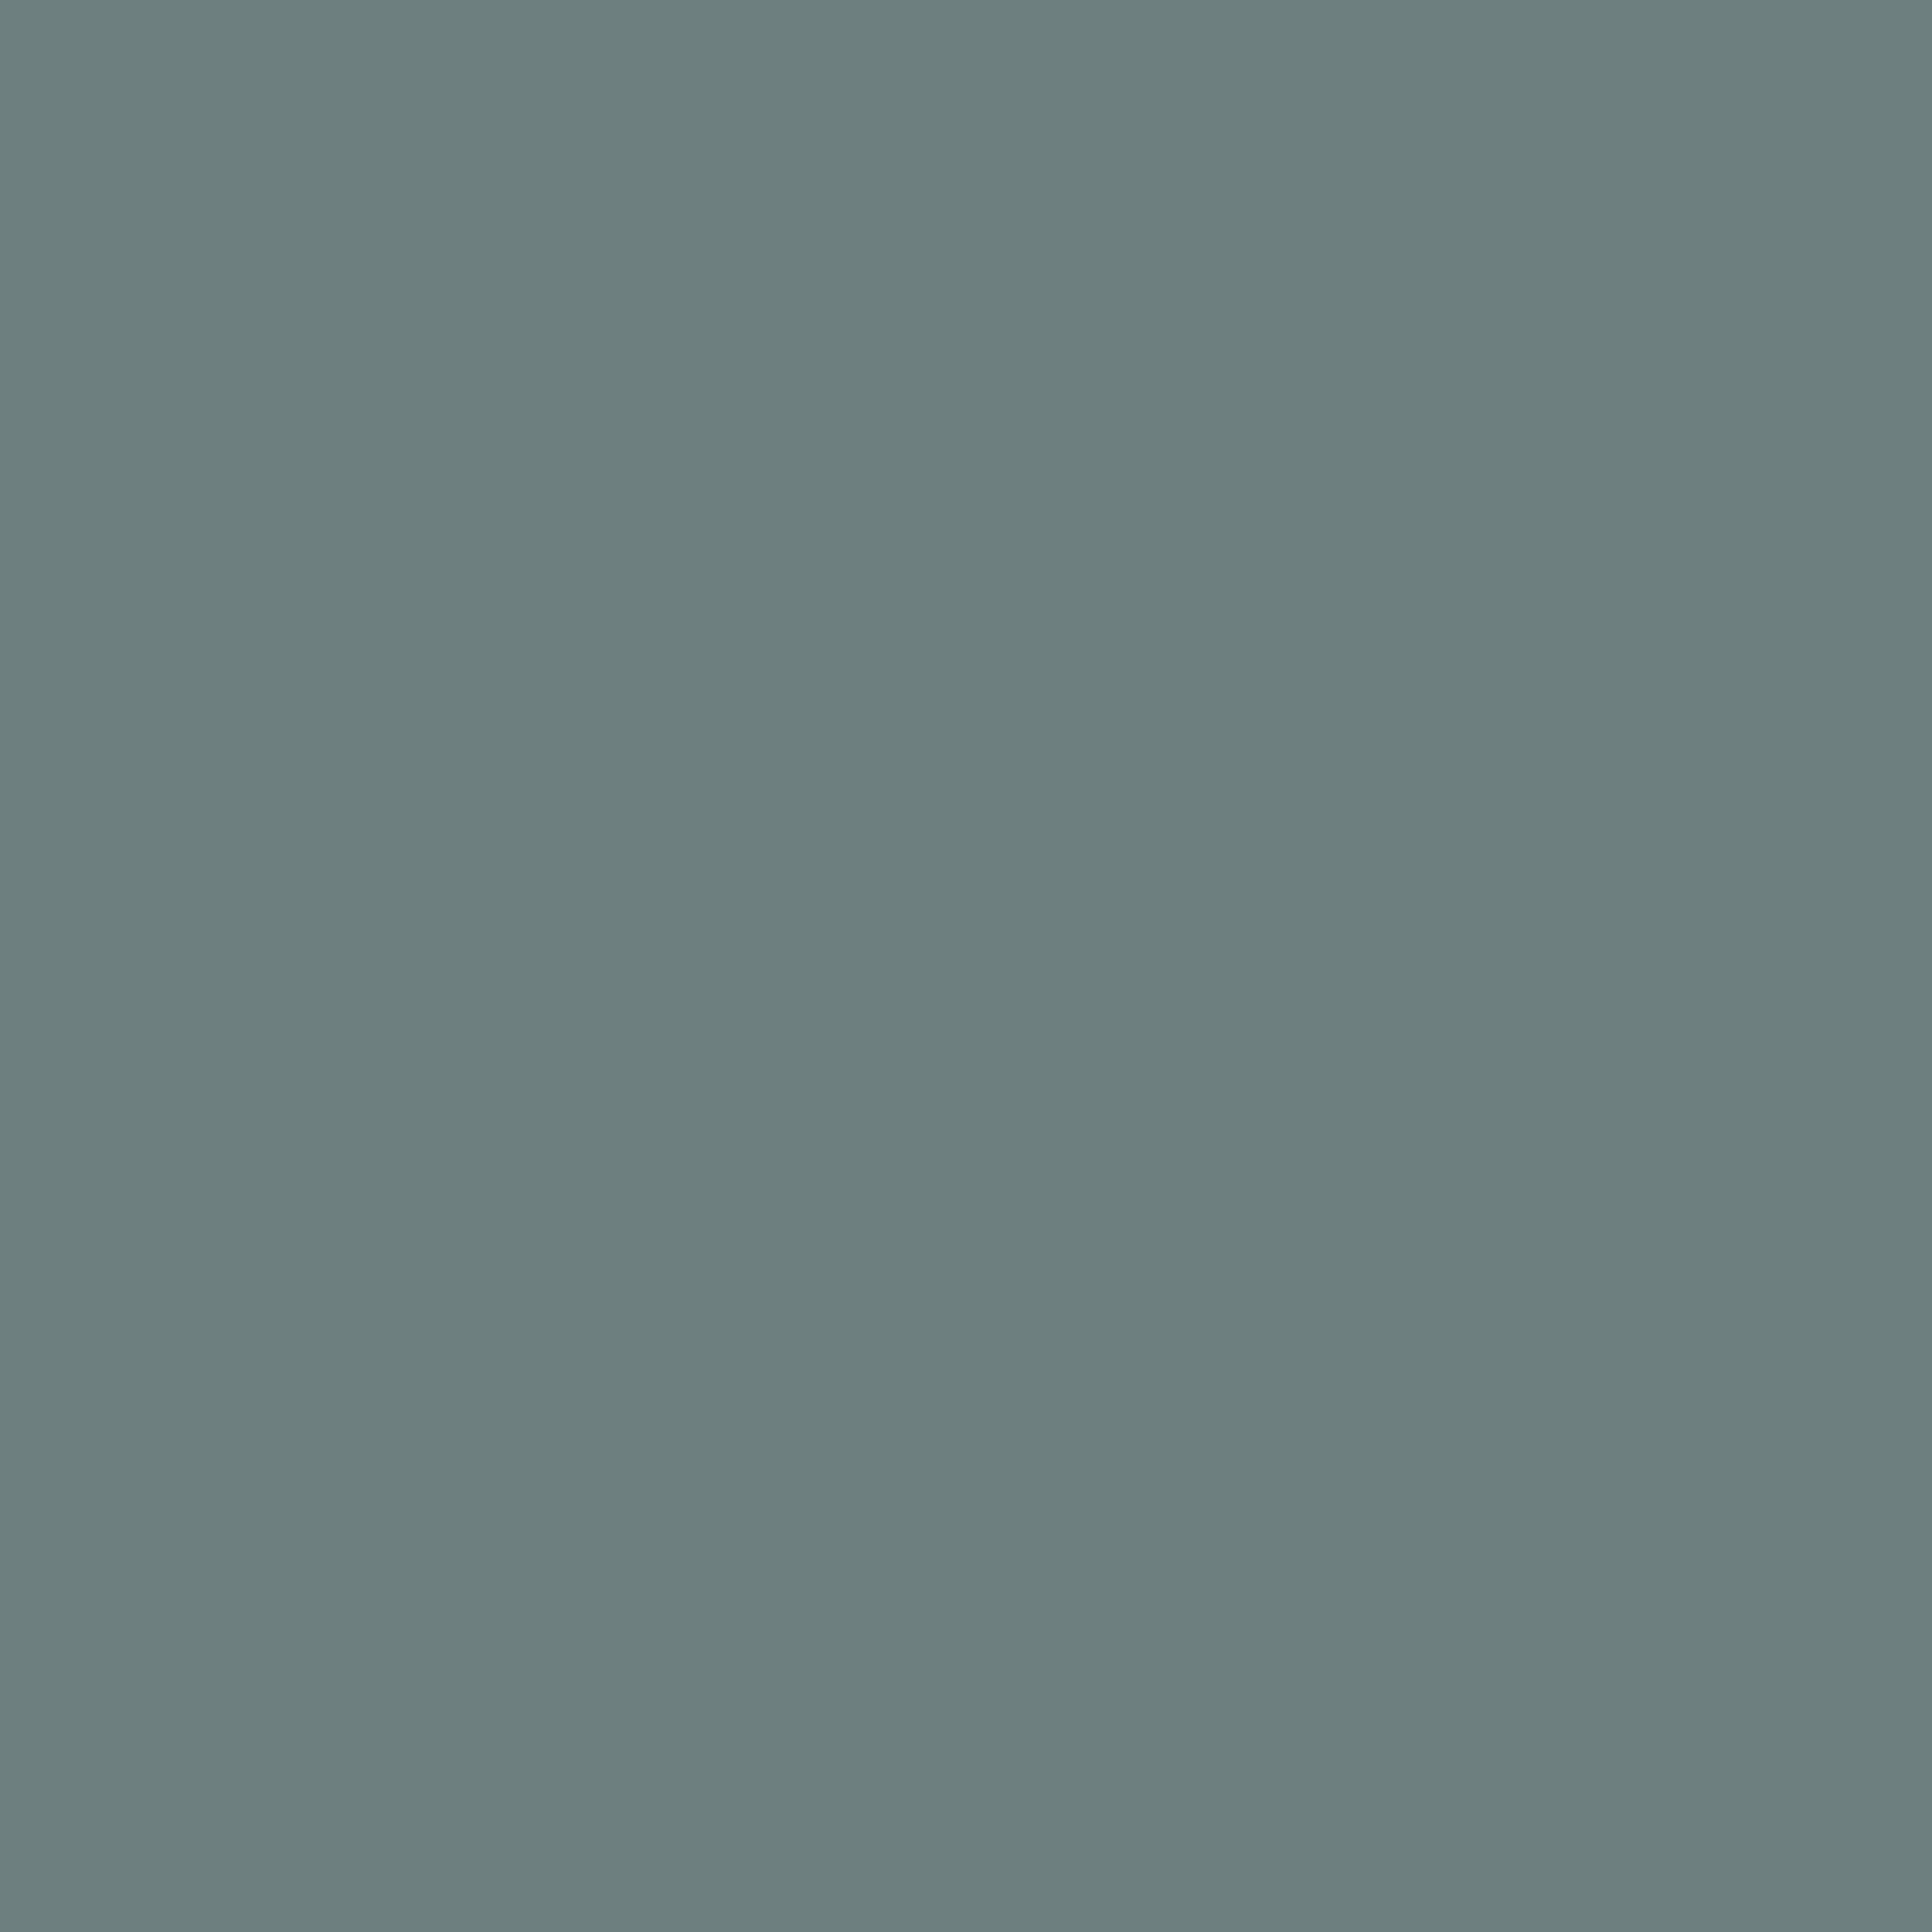 2732x2732 AuroMetalSaurus Solid Color Background